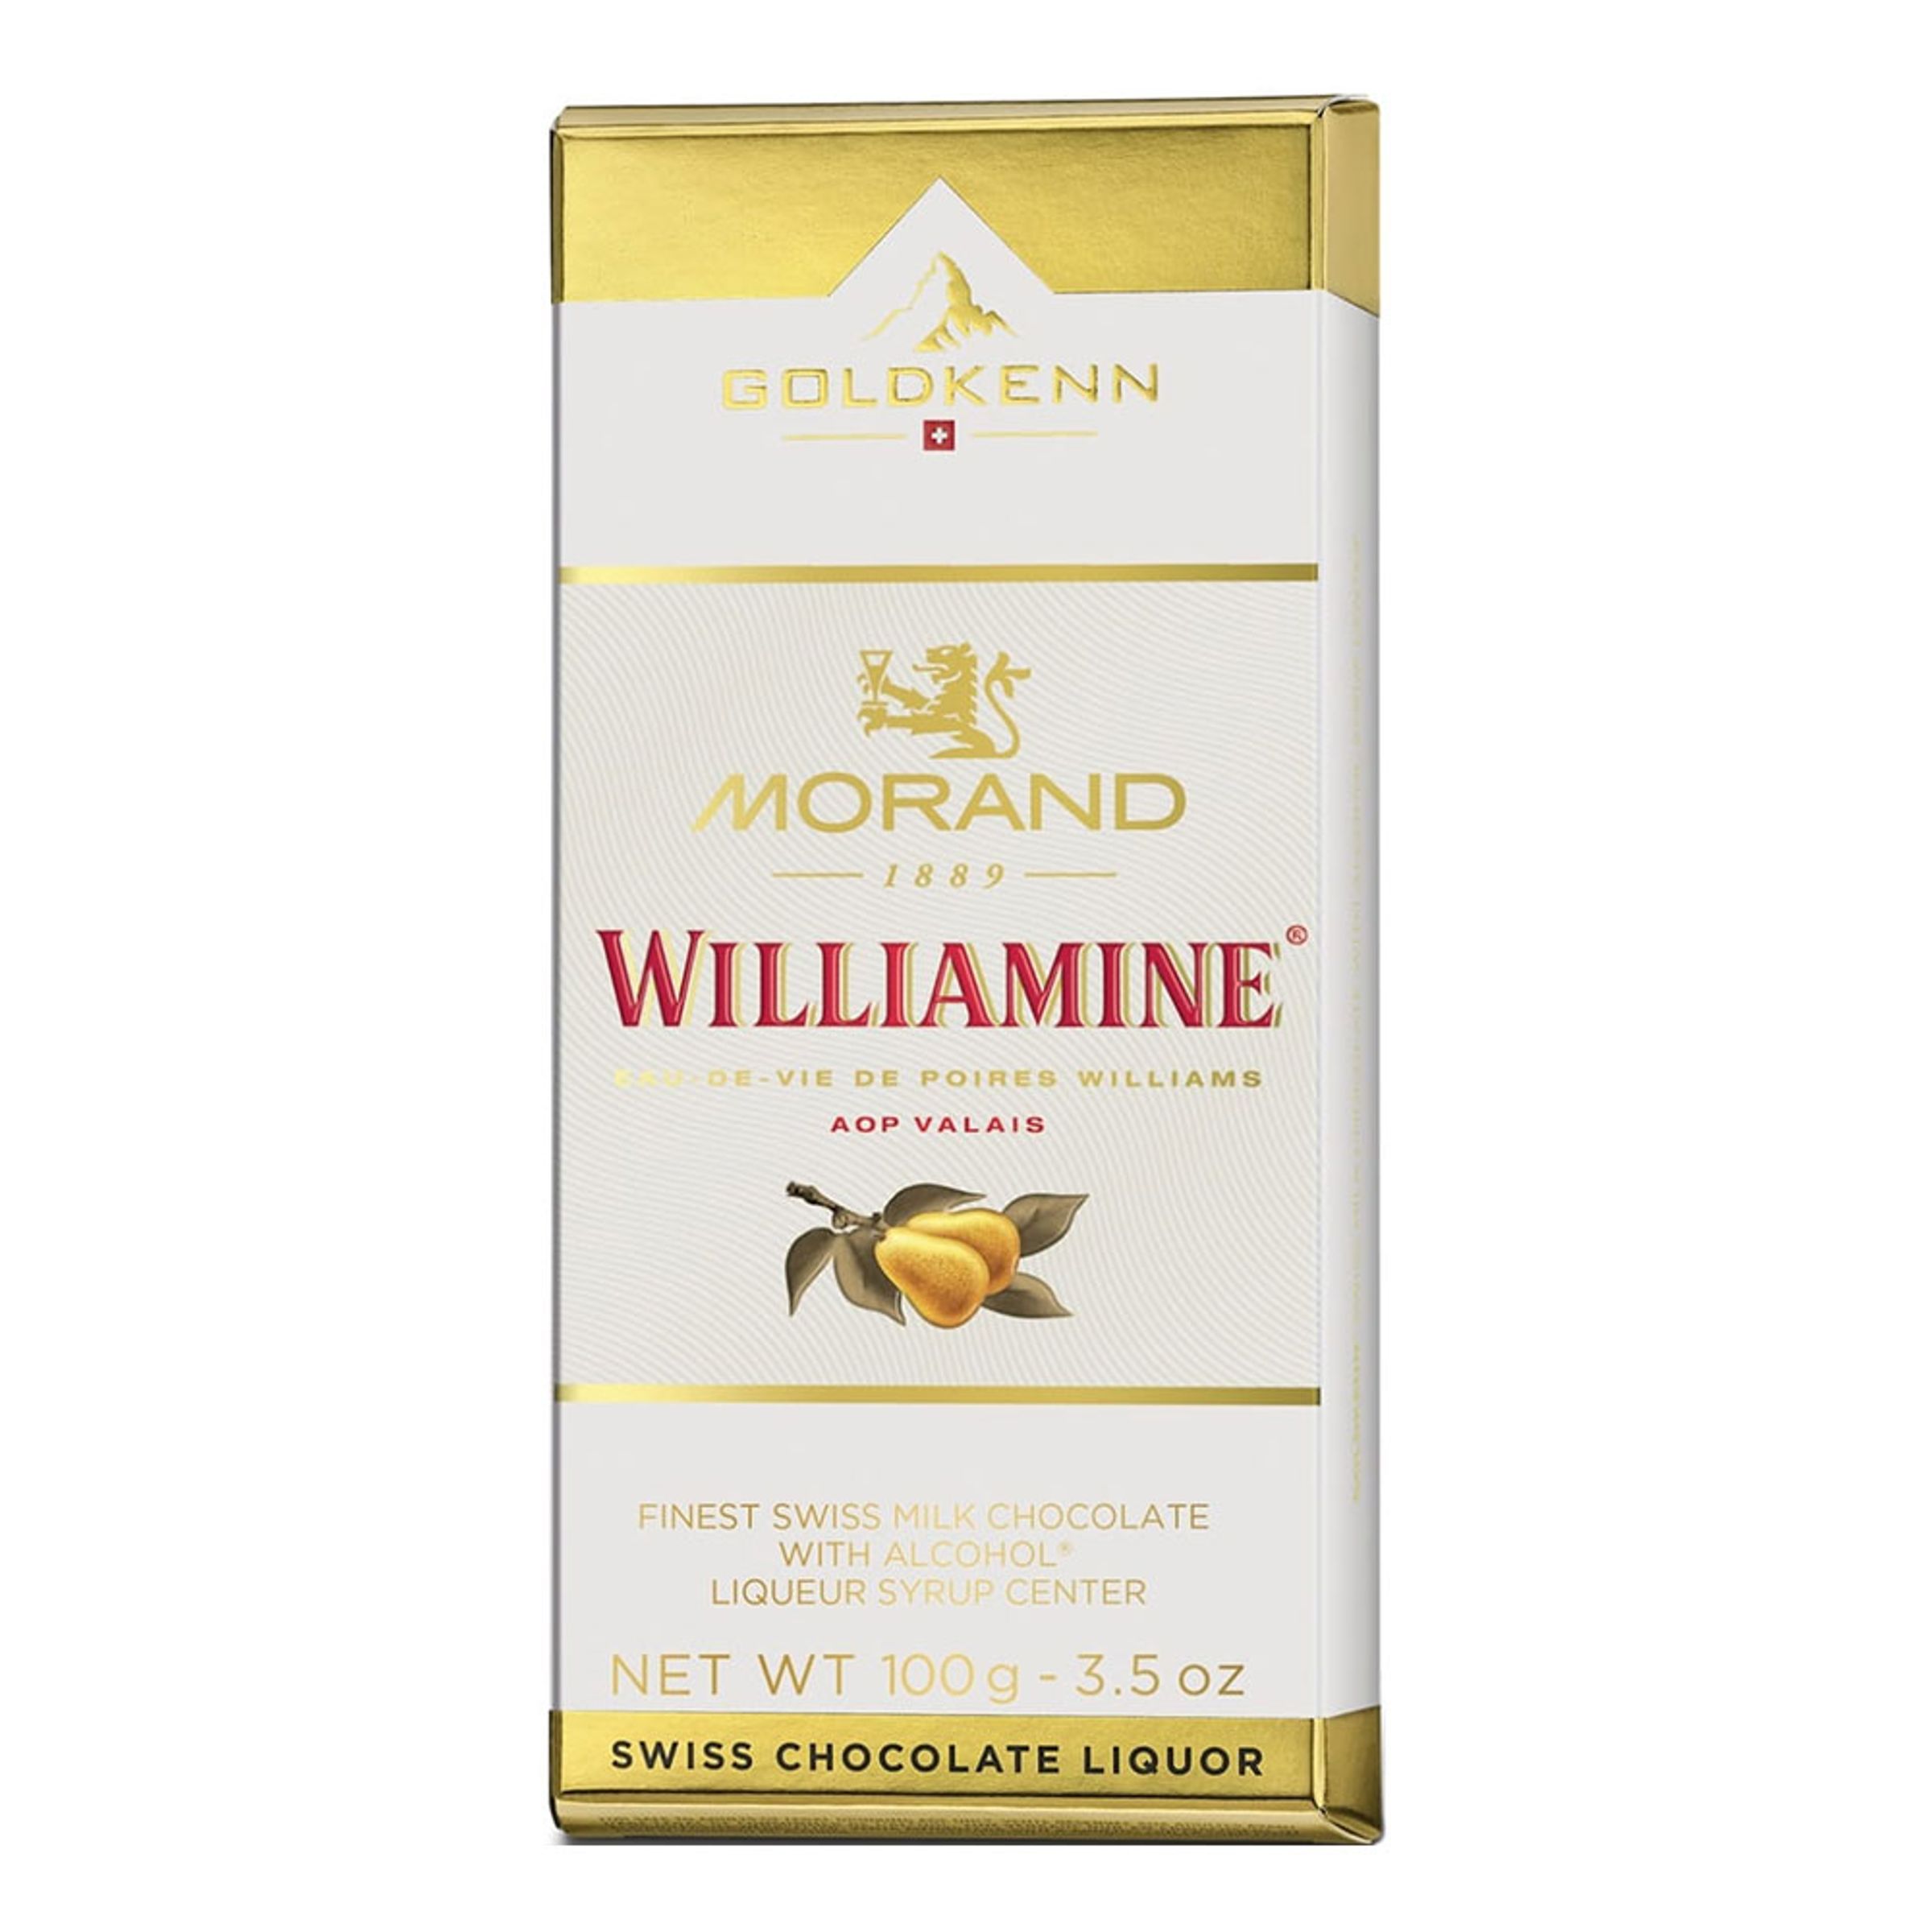 Goldkenn Williamine Likörfyllning Chokladkaka - 100 gram